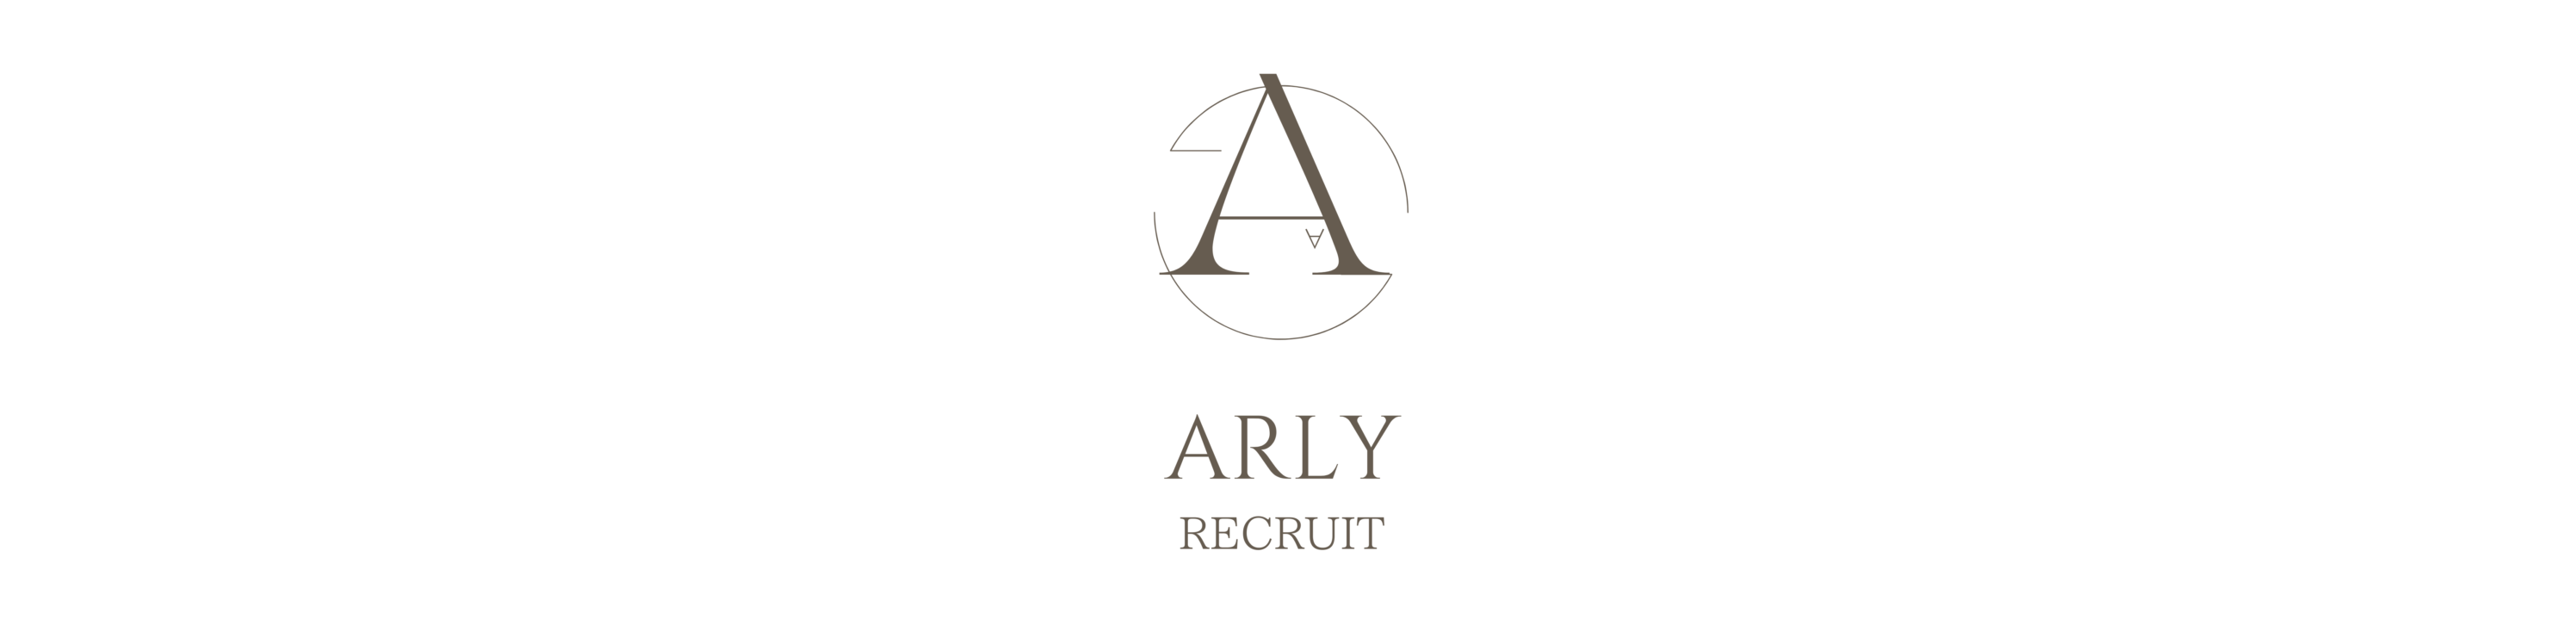 【ARLY RECRUIT】福岡市天神・美容師スタイリスト求人・転職・募集